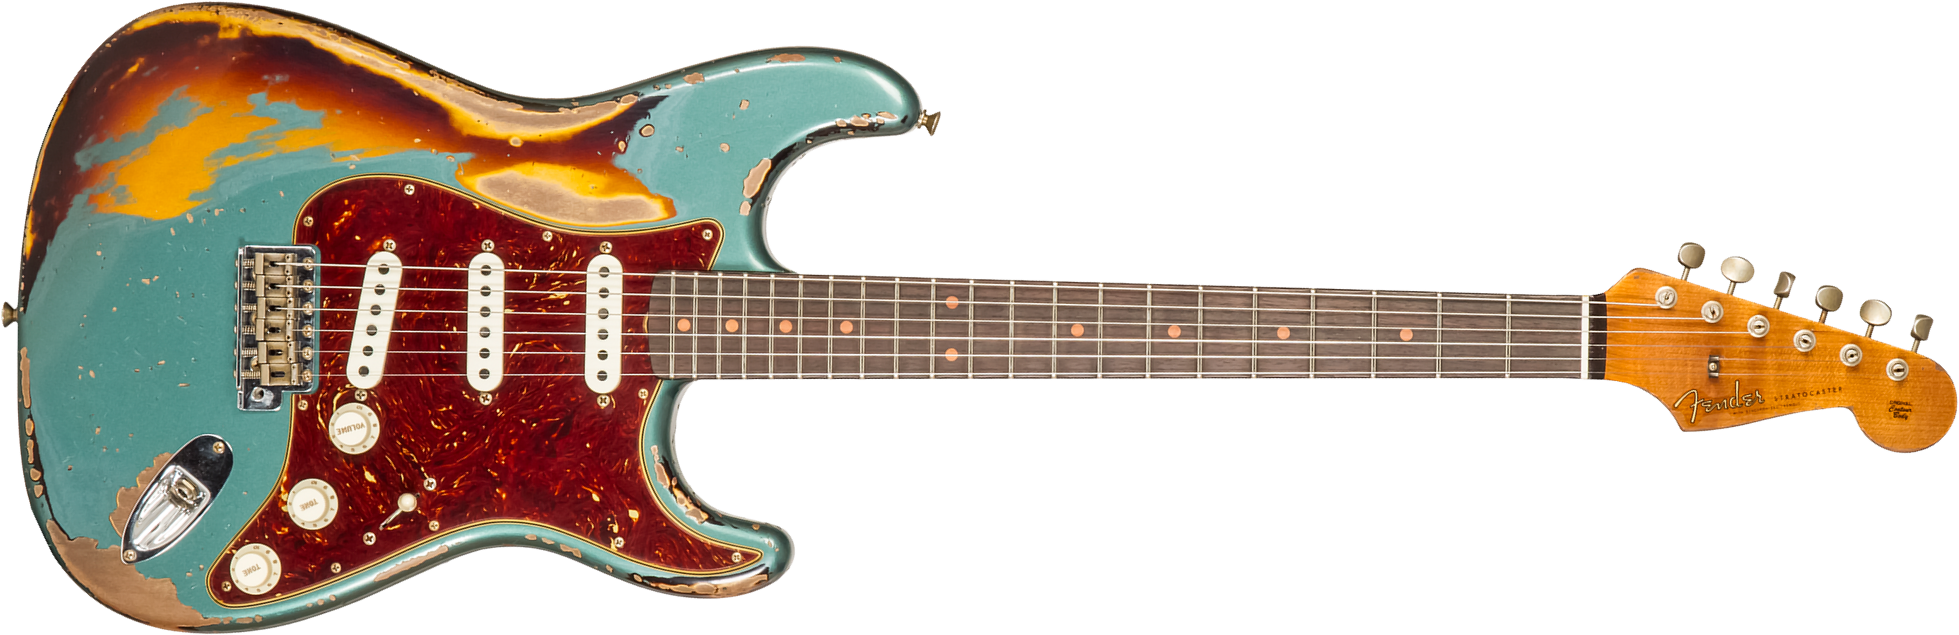 Fender Custom Shop Strat 1961 3s Trem Rw #cz573502 - Super Heavy Relic Sherwood Green Metallic O. 3-cs - Guitare Électrique Forme Str - Main picture